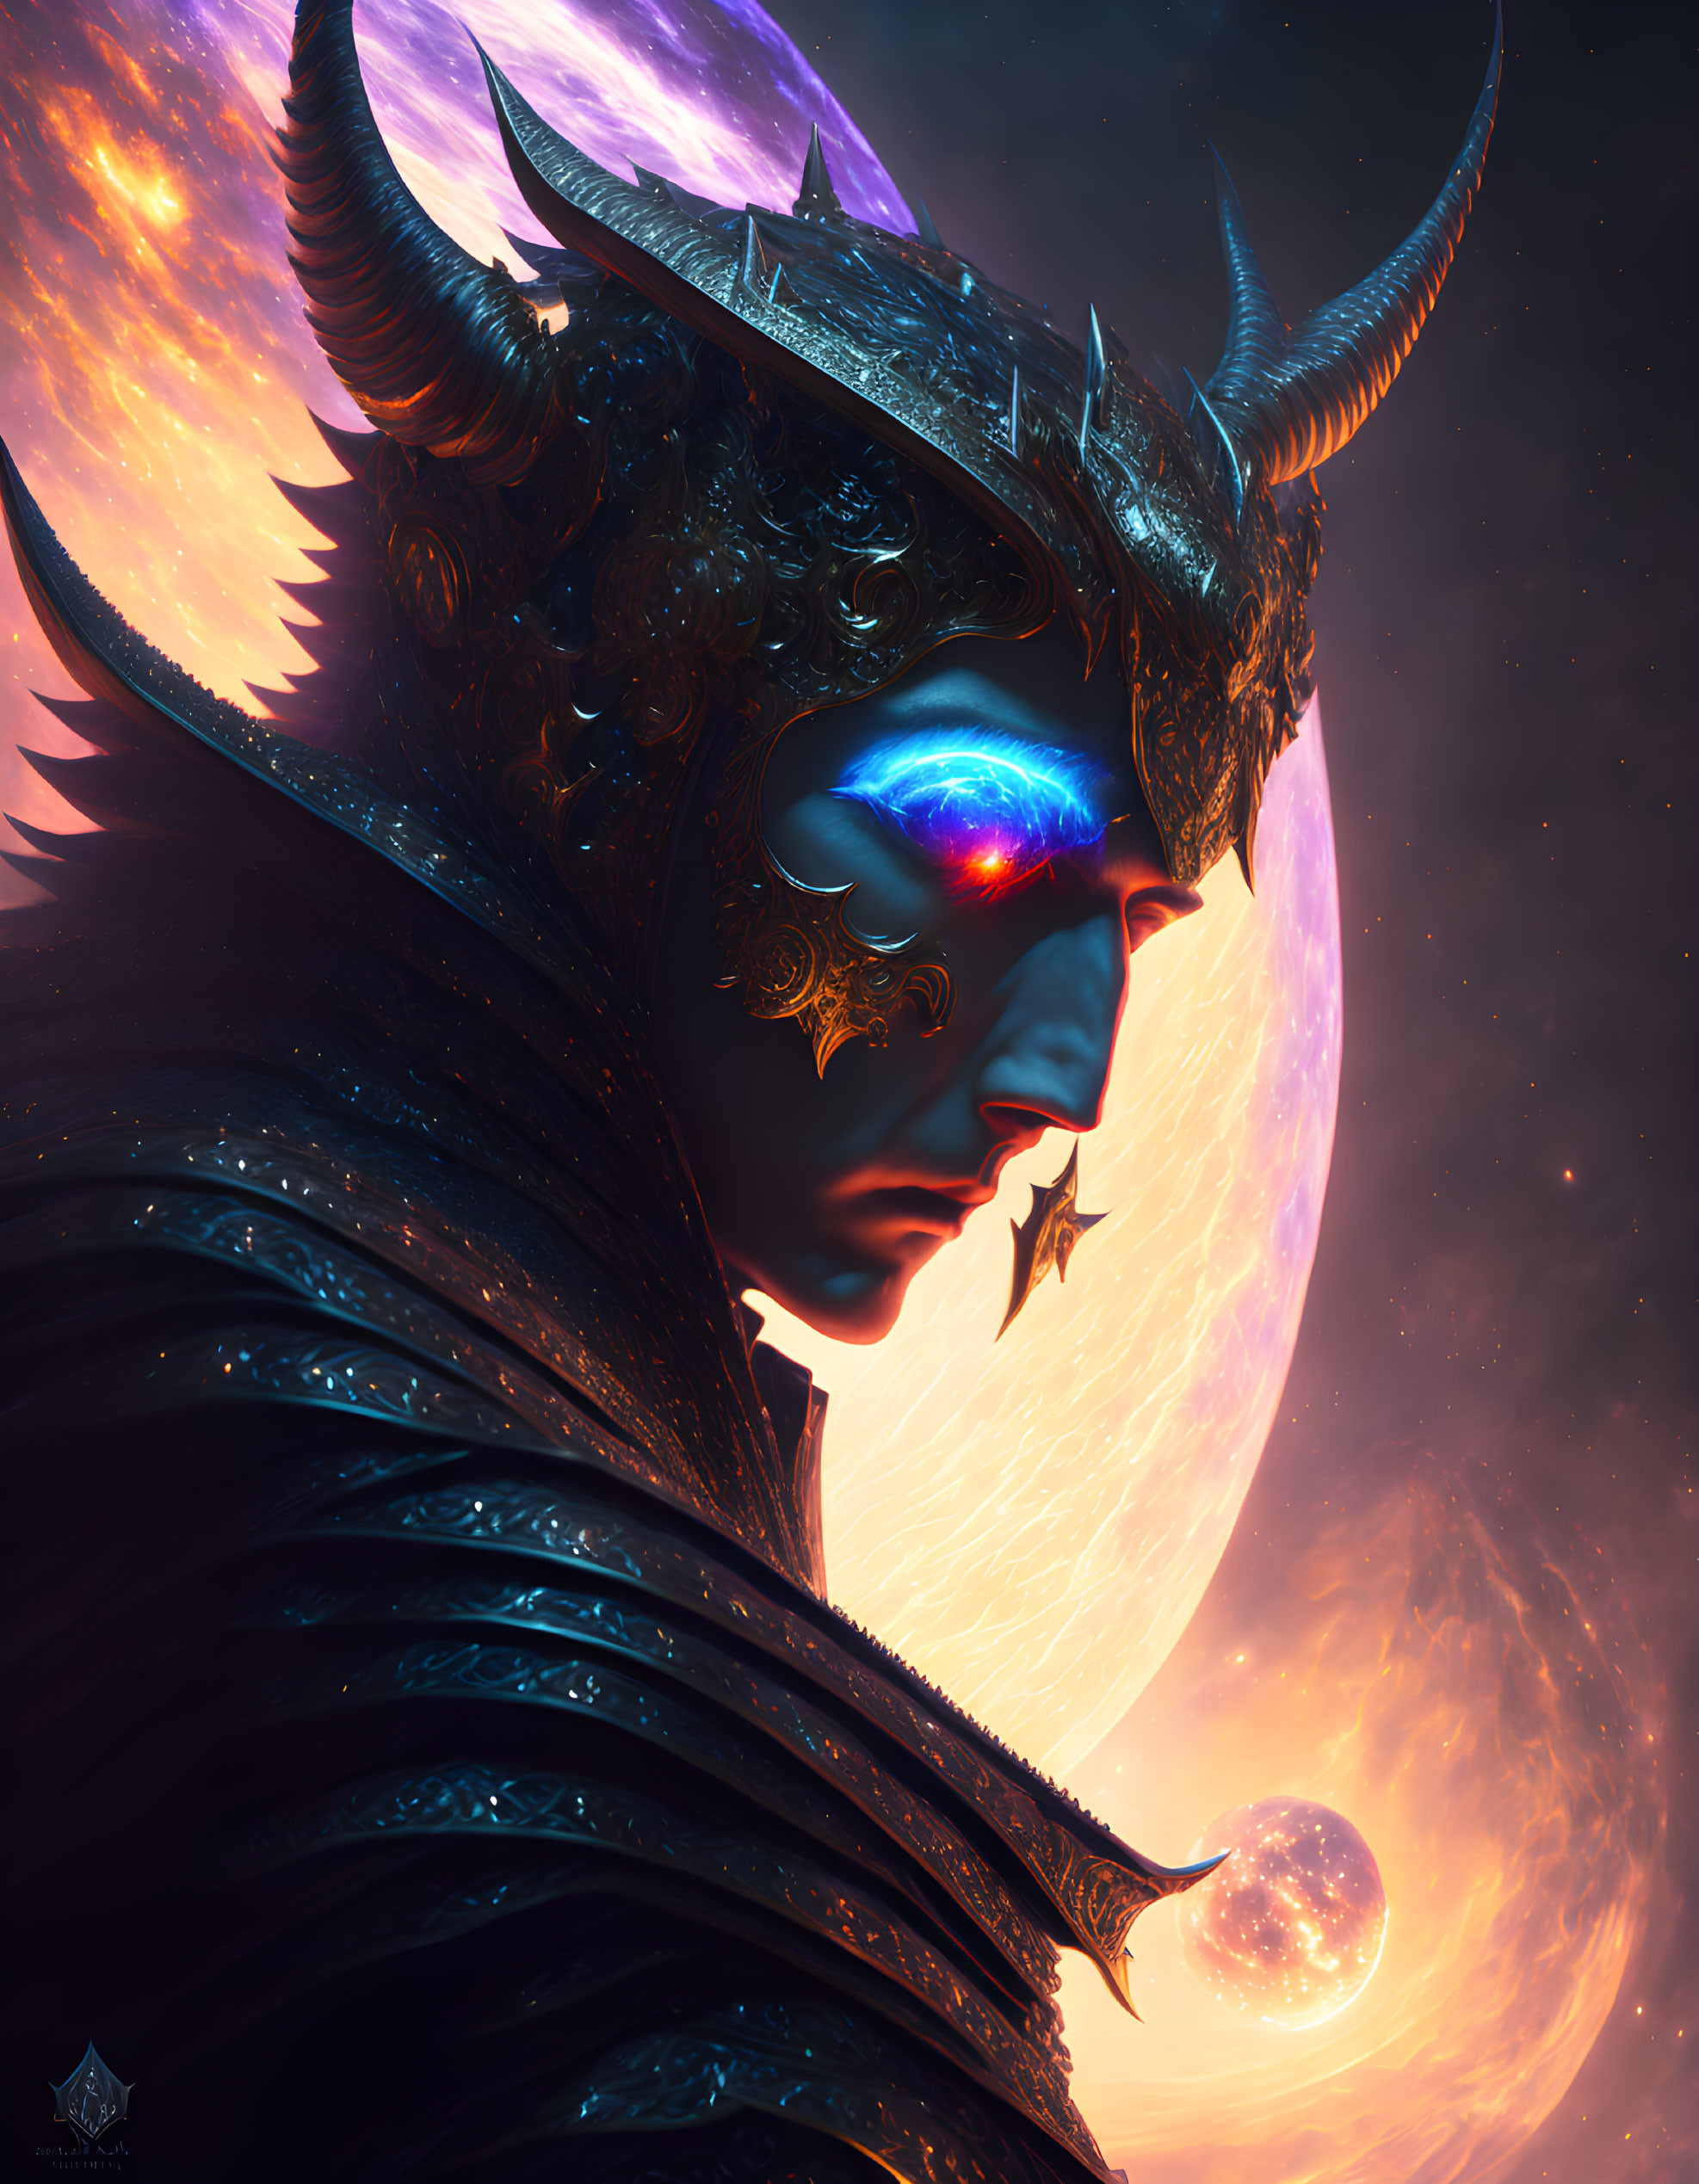 Fantastical figure in ornate armor gazes at glowing orb in celestial scene